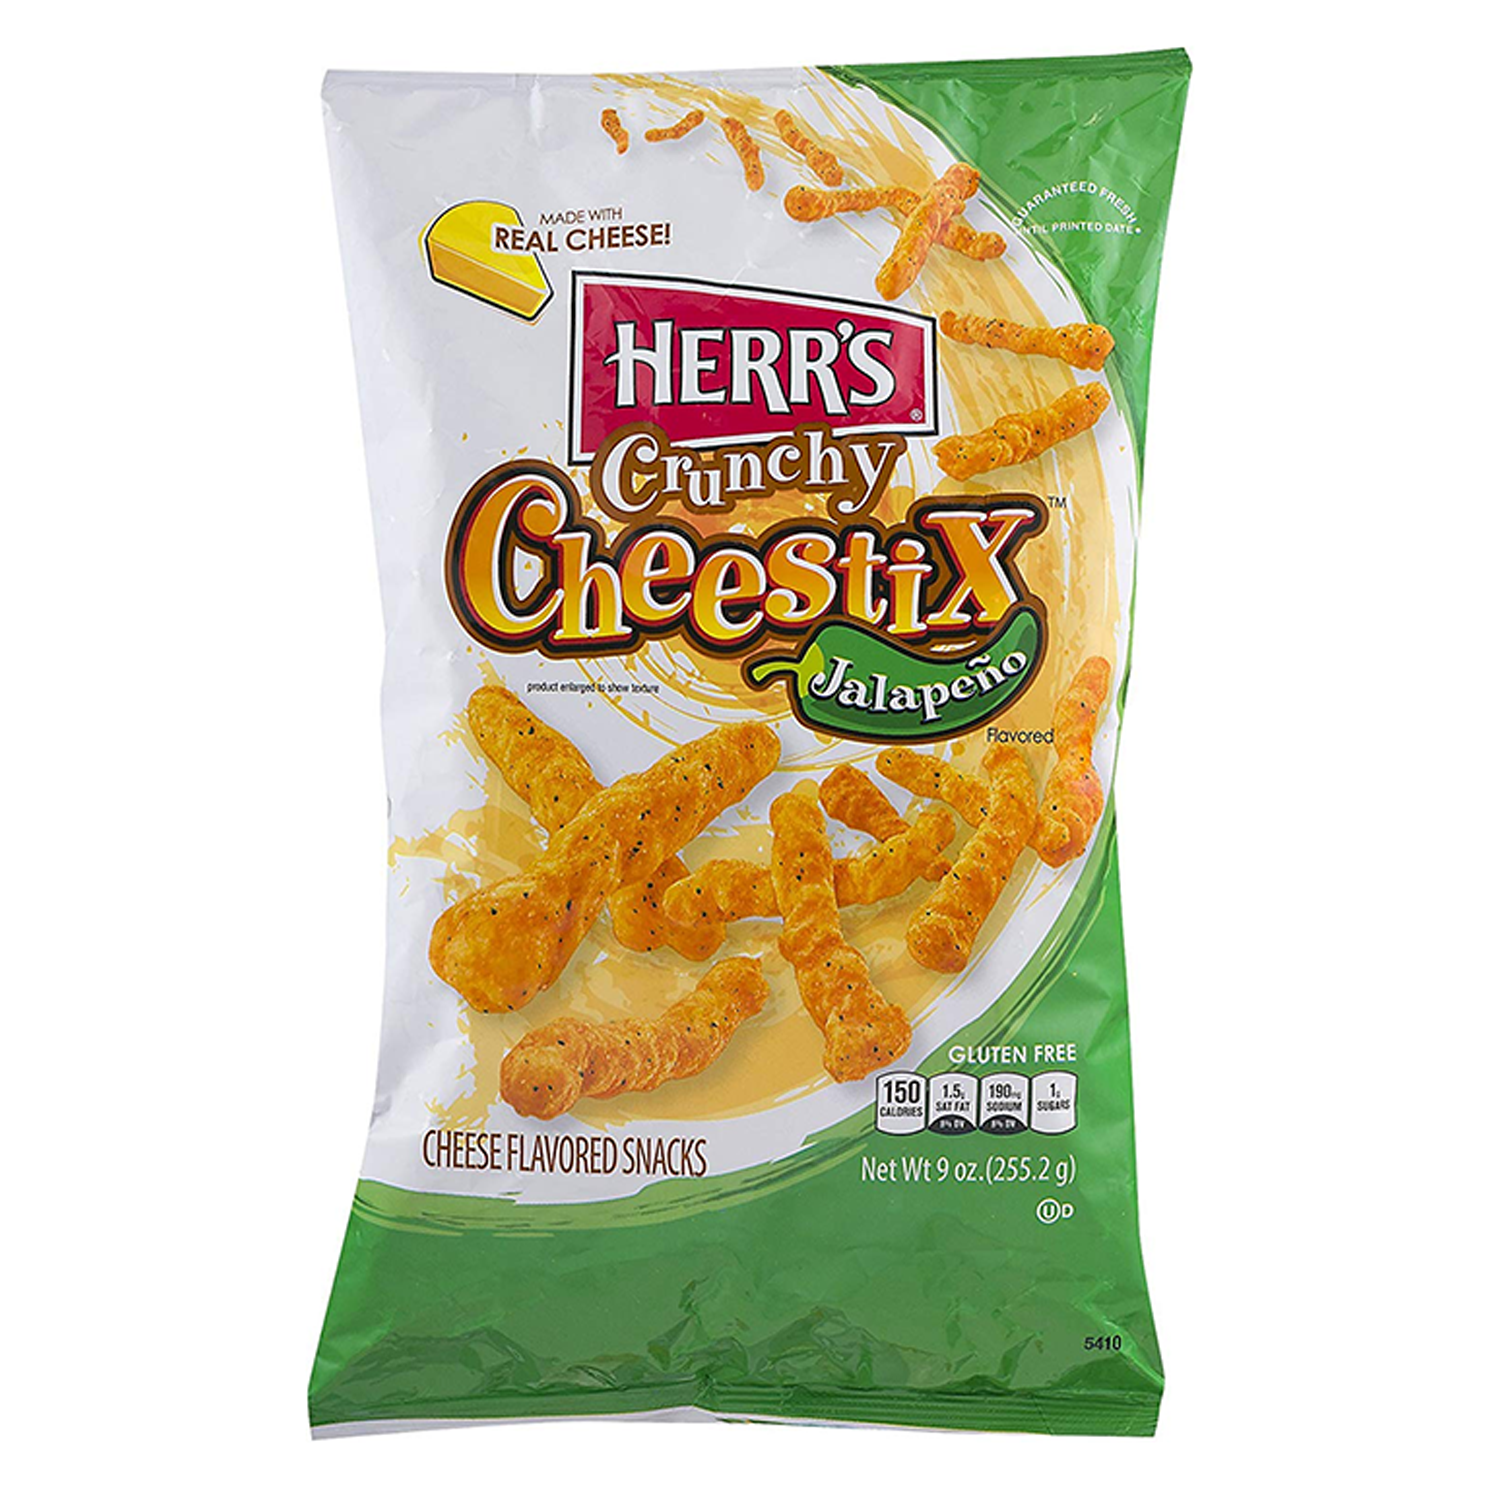 Herr's Jalapeno Crunchy Cheestix LARGE